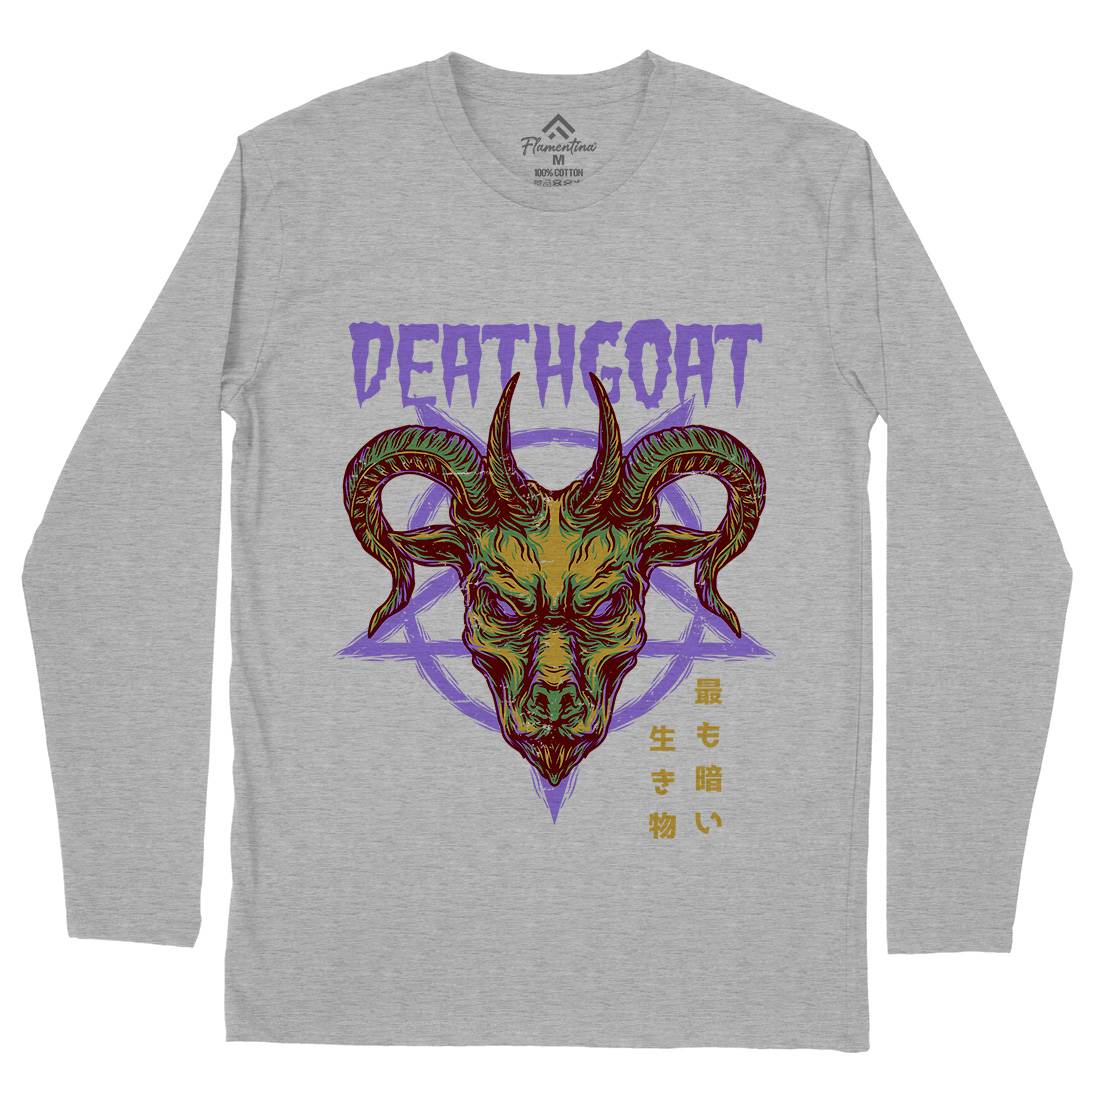 Death Goat Mens Long Sleeve T-Shirt Horror D755